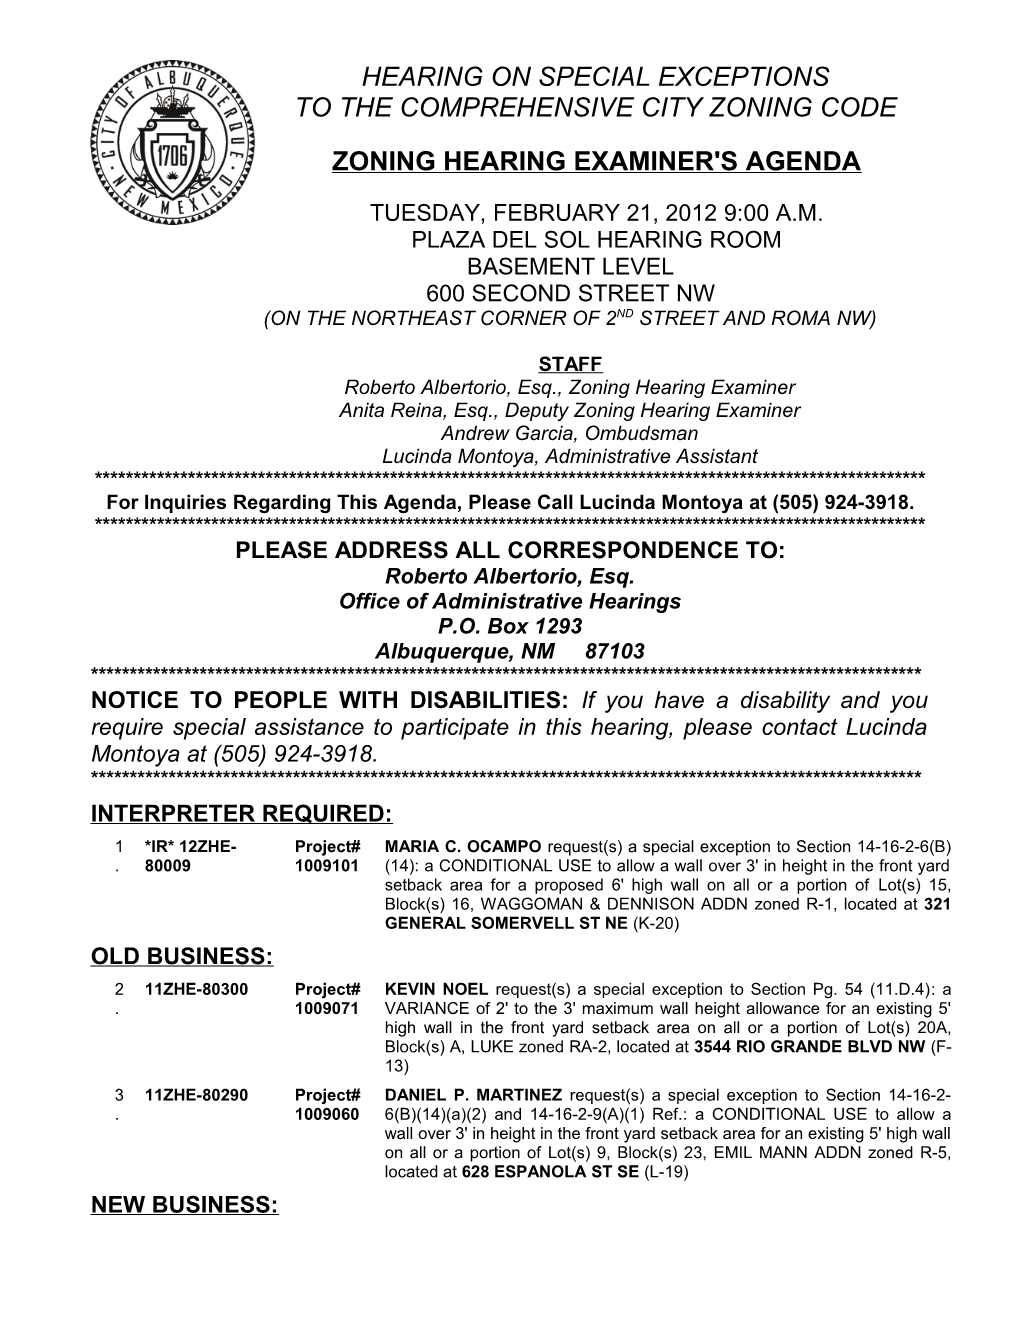 Zoning Hearing Examiner's Agenda